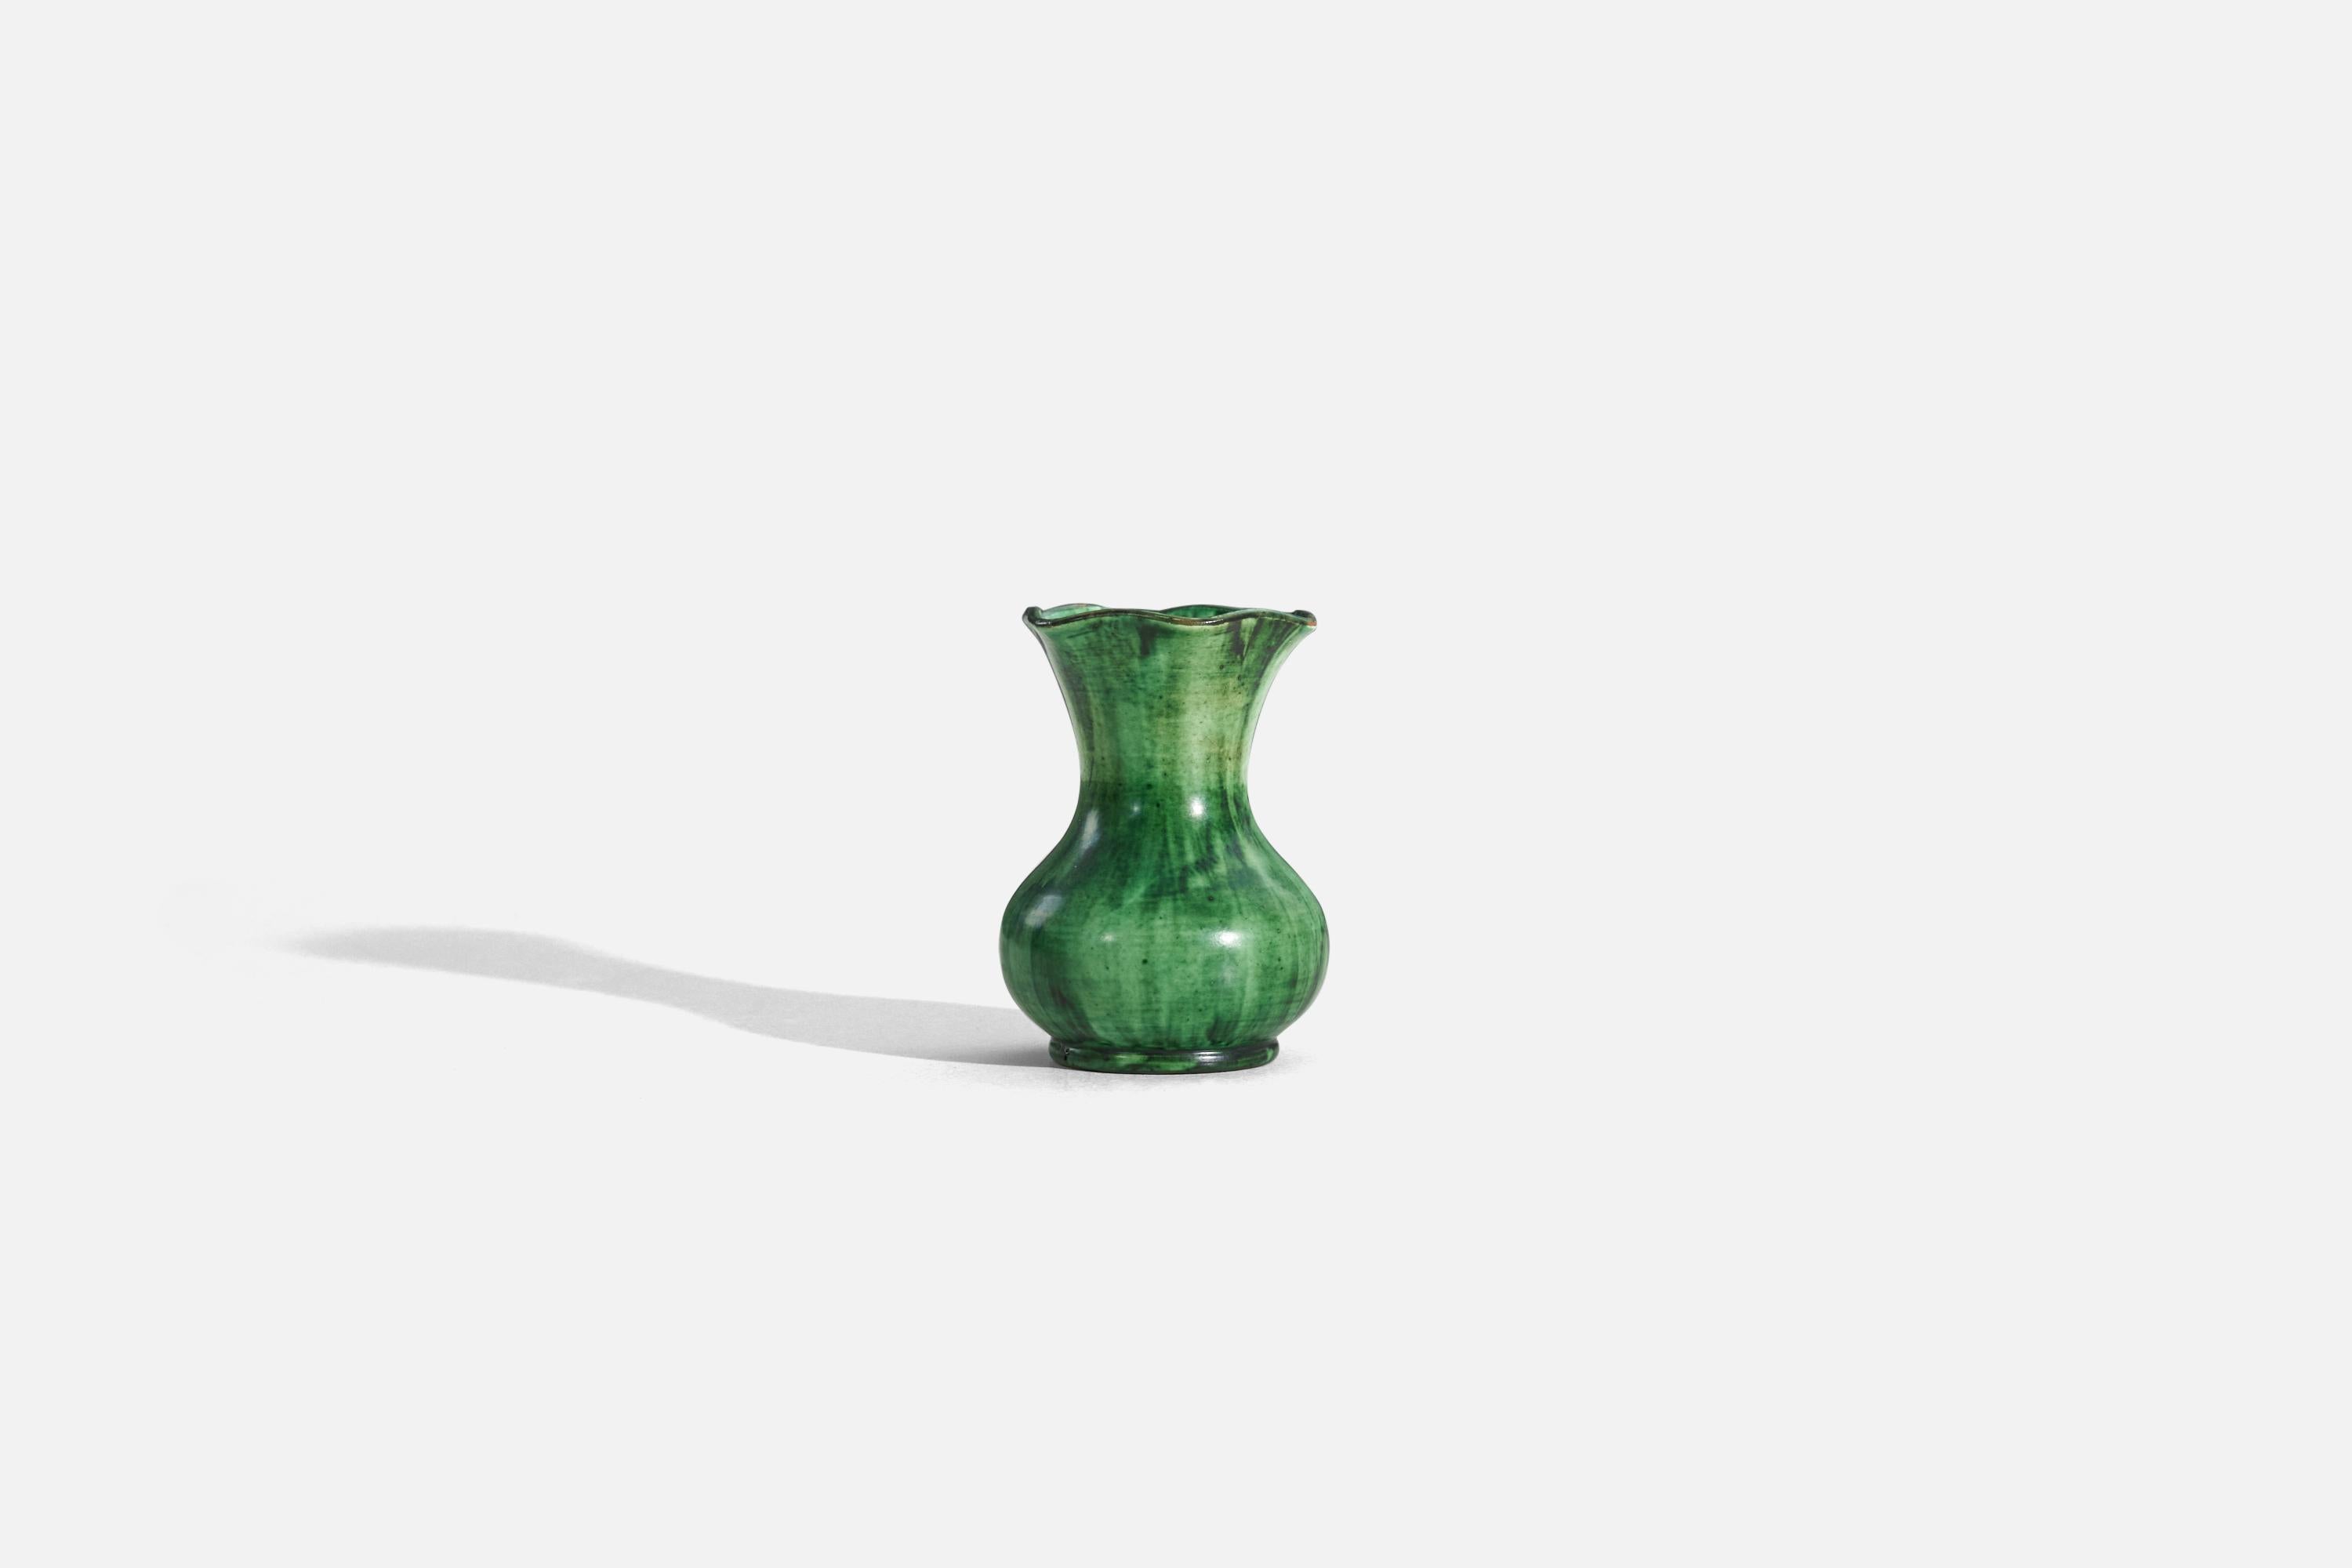 A green, glazed earthenware vase designed and produced by Nittsjö, Sweden, c. 1940s. 

